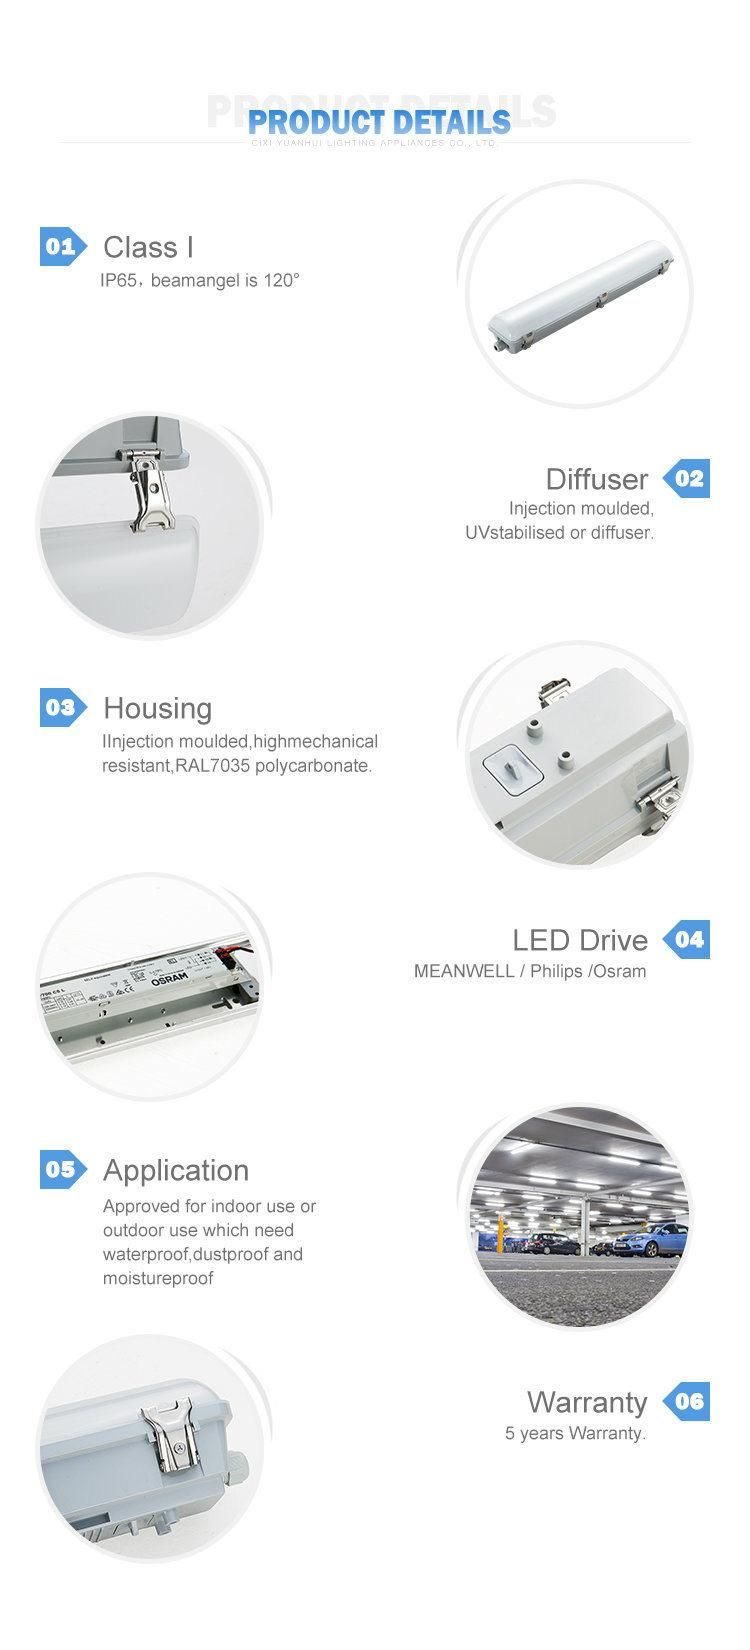 Lighting Fixture, Ence GS RoHS 3FT 5FT 6FT LED Waterproof Light, Tri-Proof Light for Park Lots, LED Pendant Light